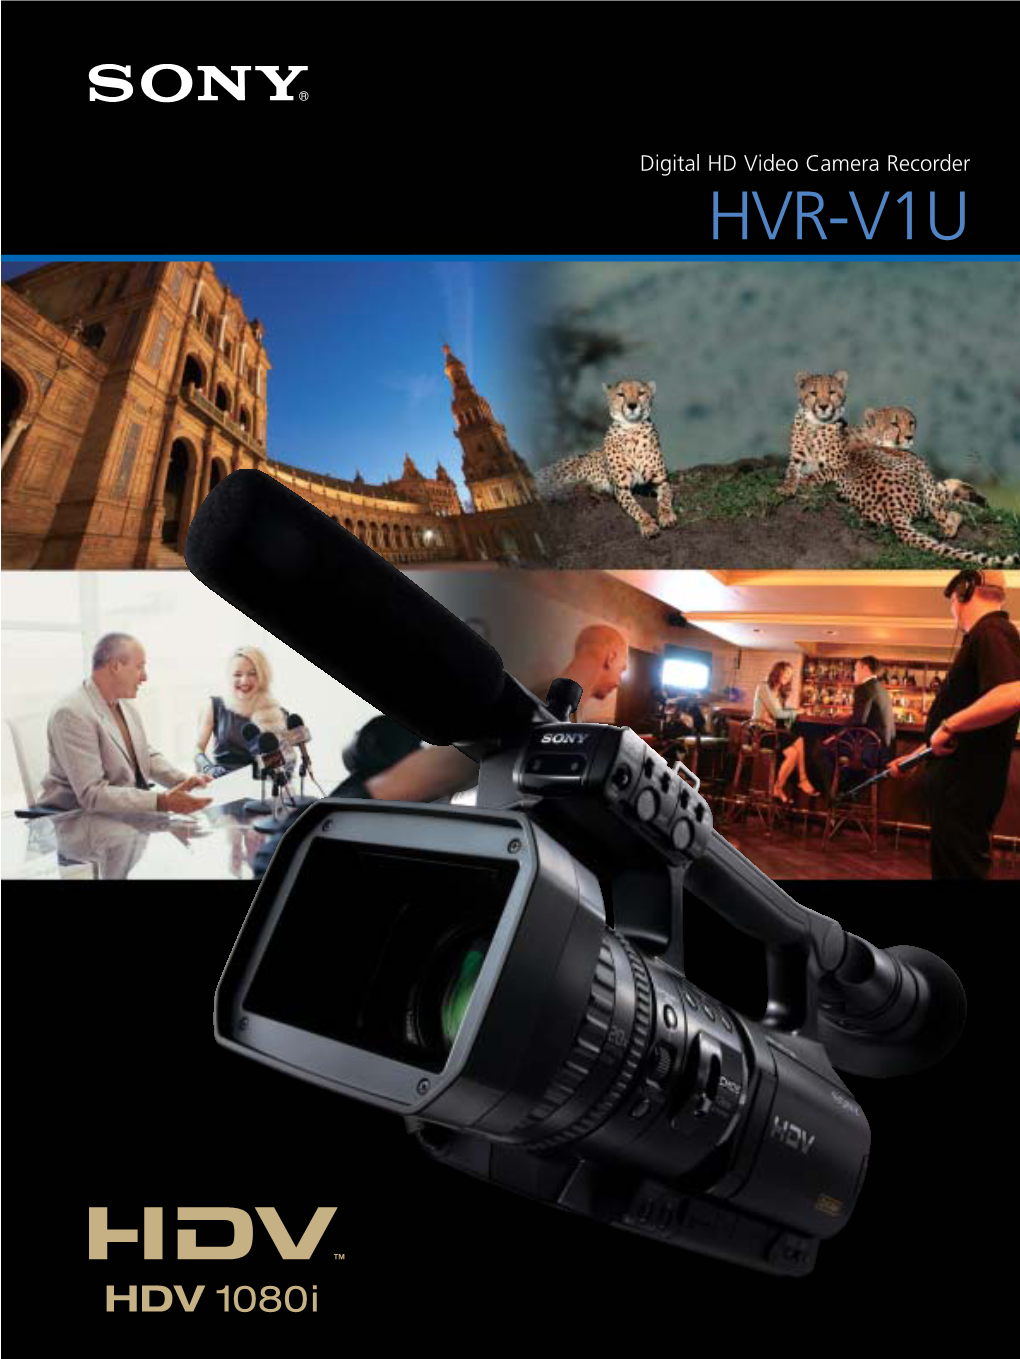 HVR-V1U Adding 1080-24P/30P Image Capture to the Sony HDV Family of Camcorders – the HVR-V1U HDV Camcorder